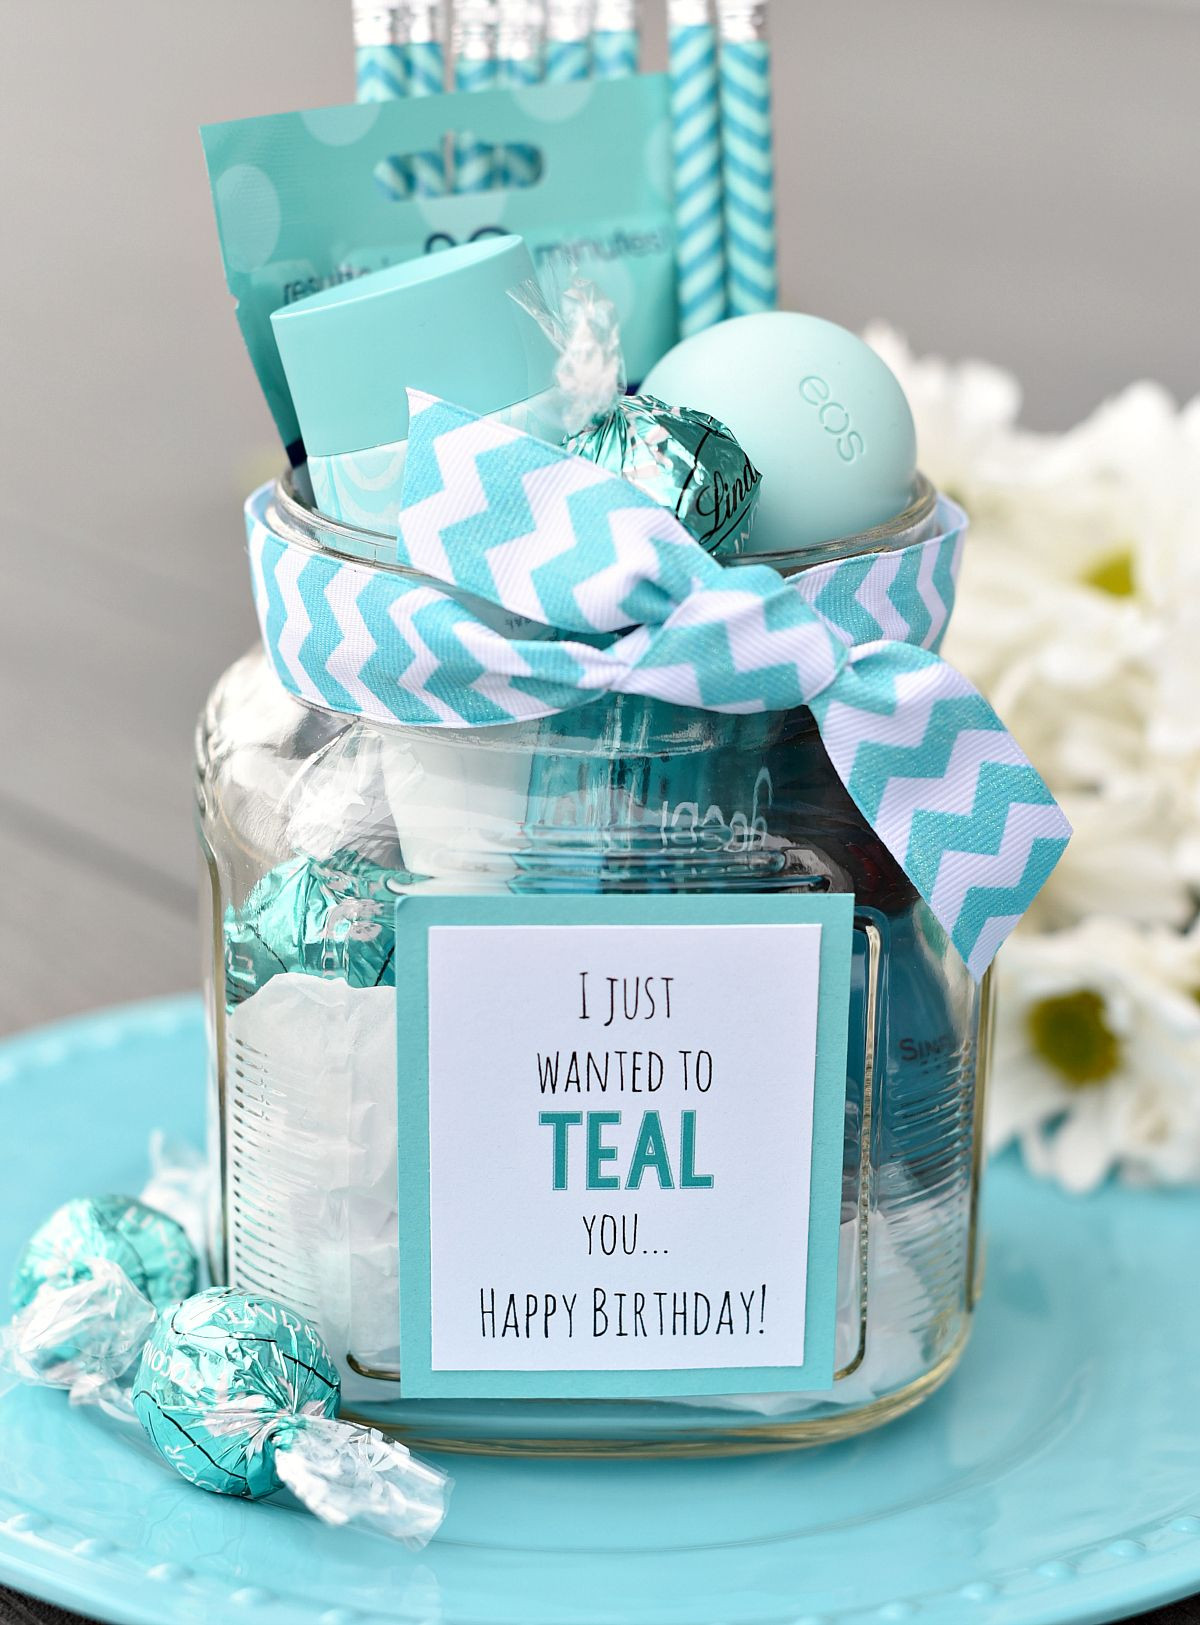 Gift Ideas Birthday
 Teal Birthday Gift Idea for Friends